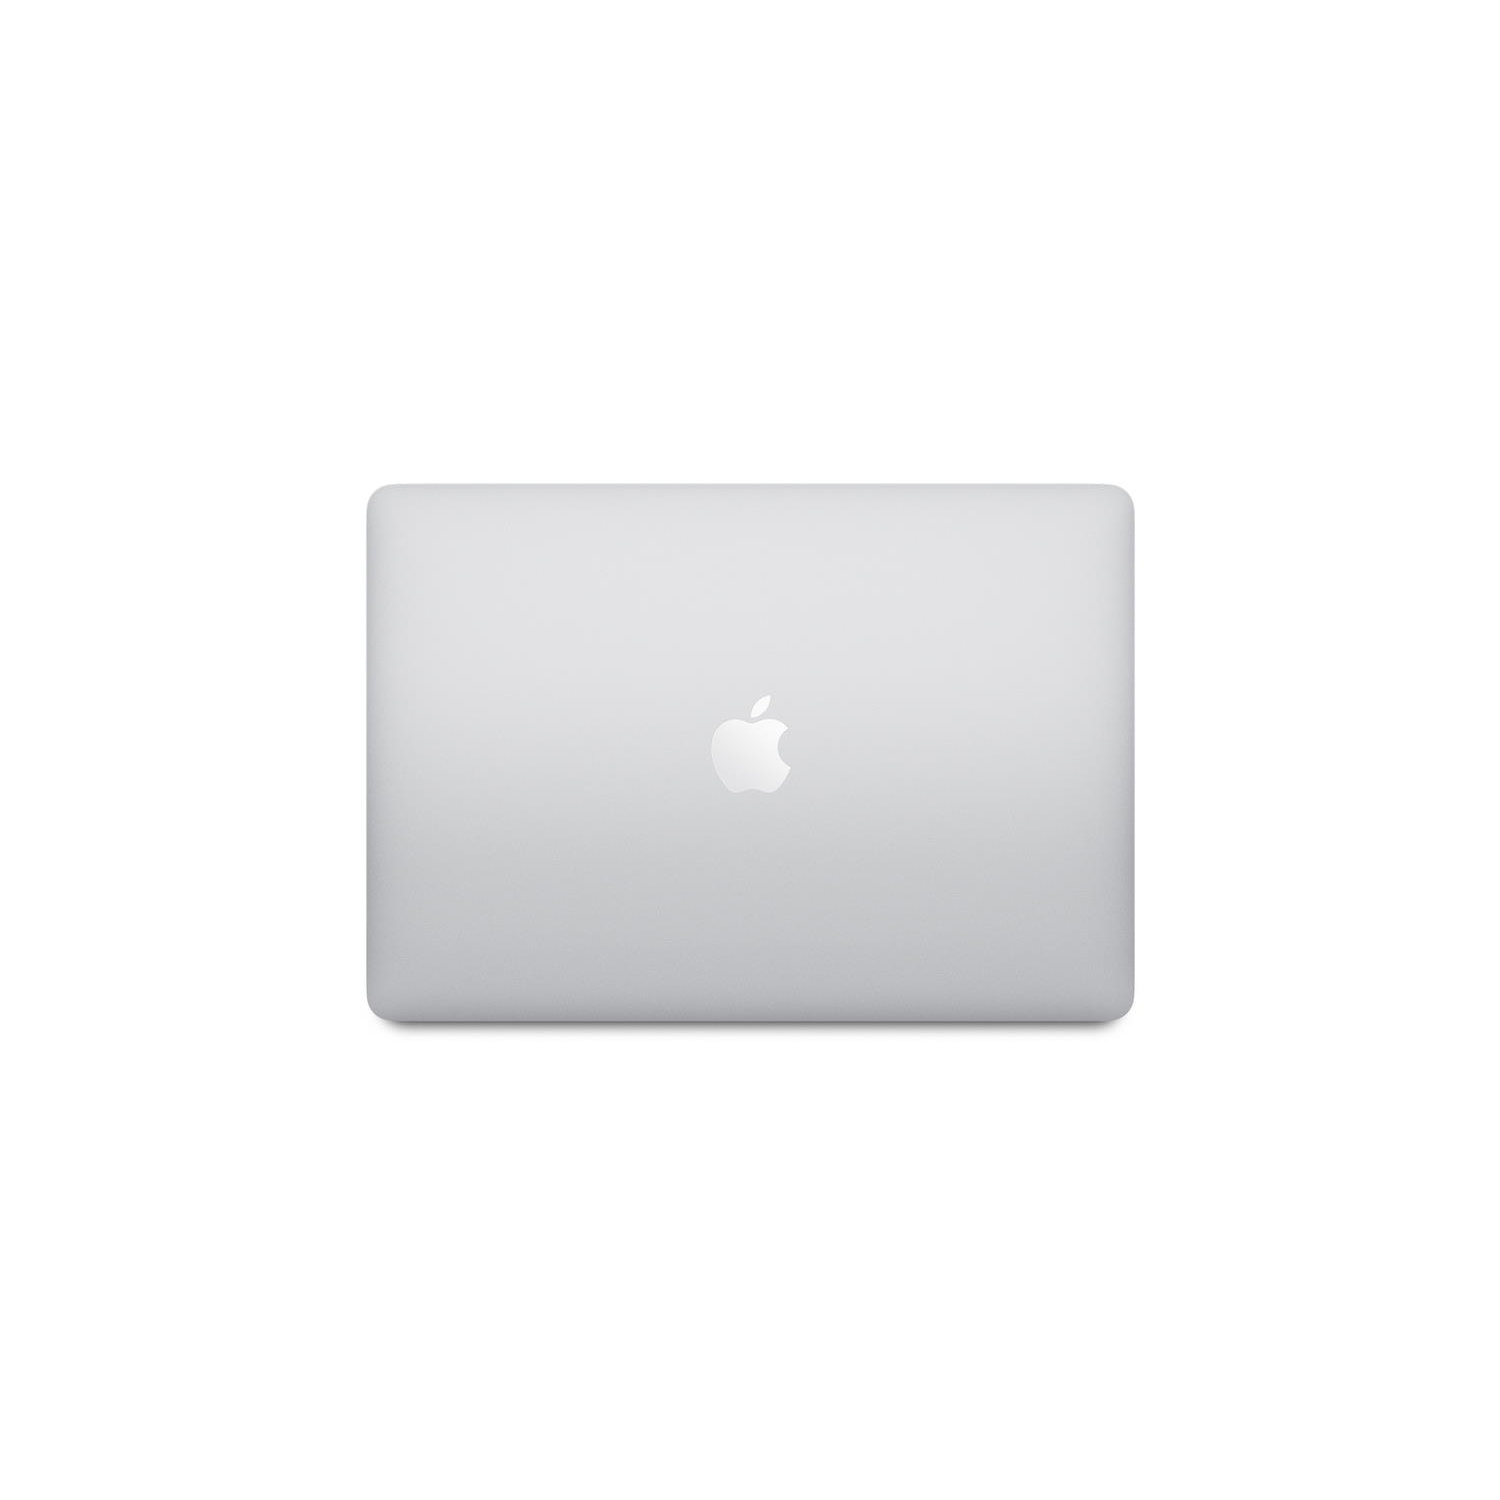 Refurbished - Good) Macbook Air 13.3-inch (Retina, Silver, 1yr